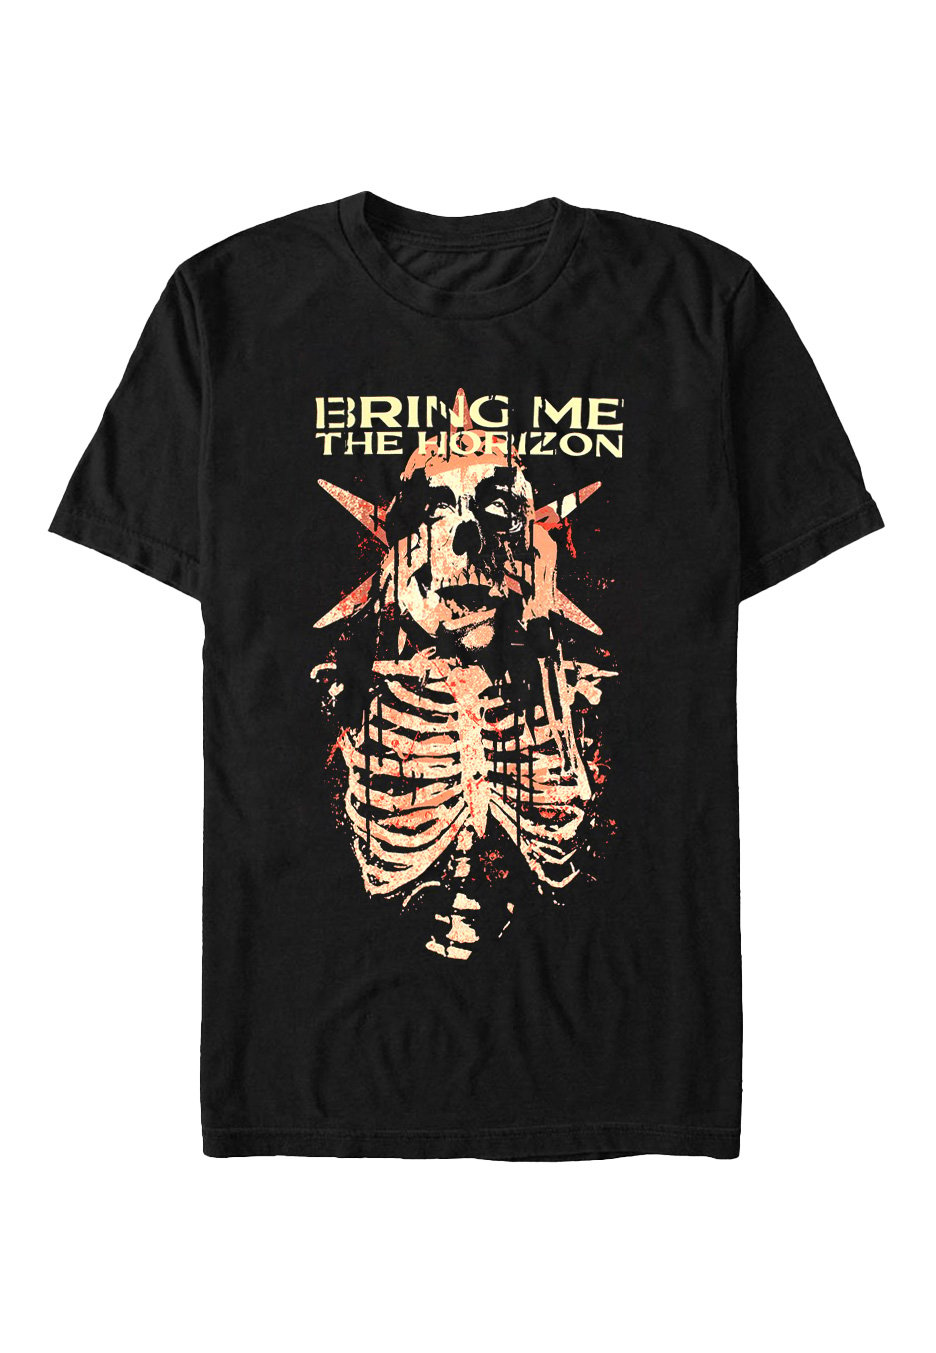 Bring Me The Horizon - Skull Mess - T-Shirt